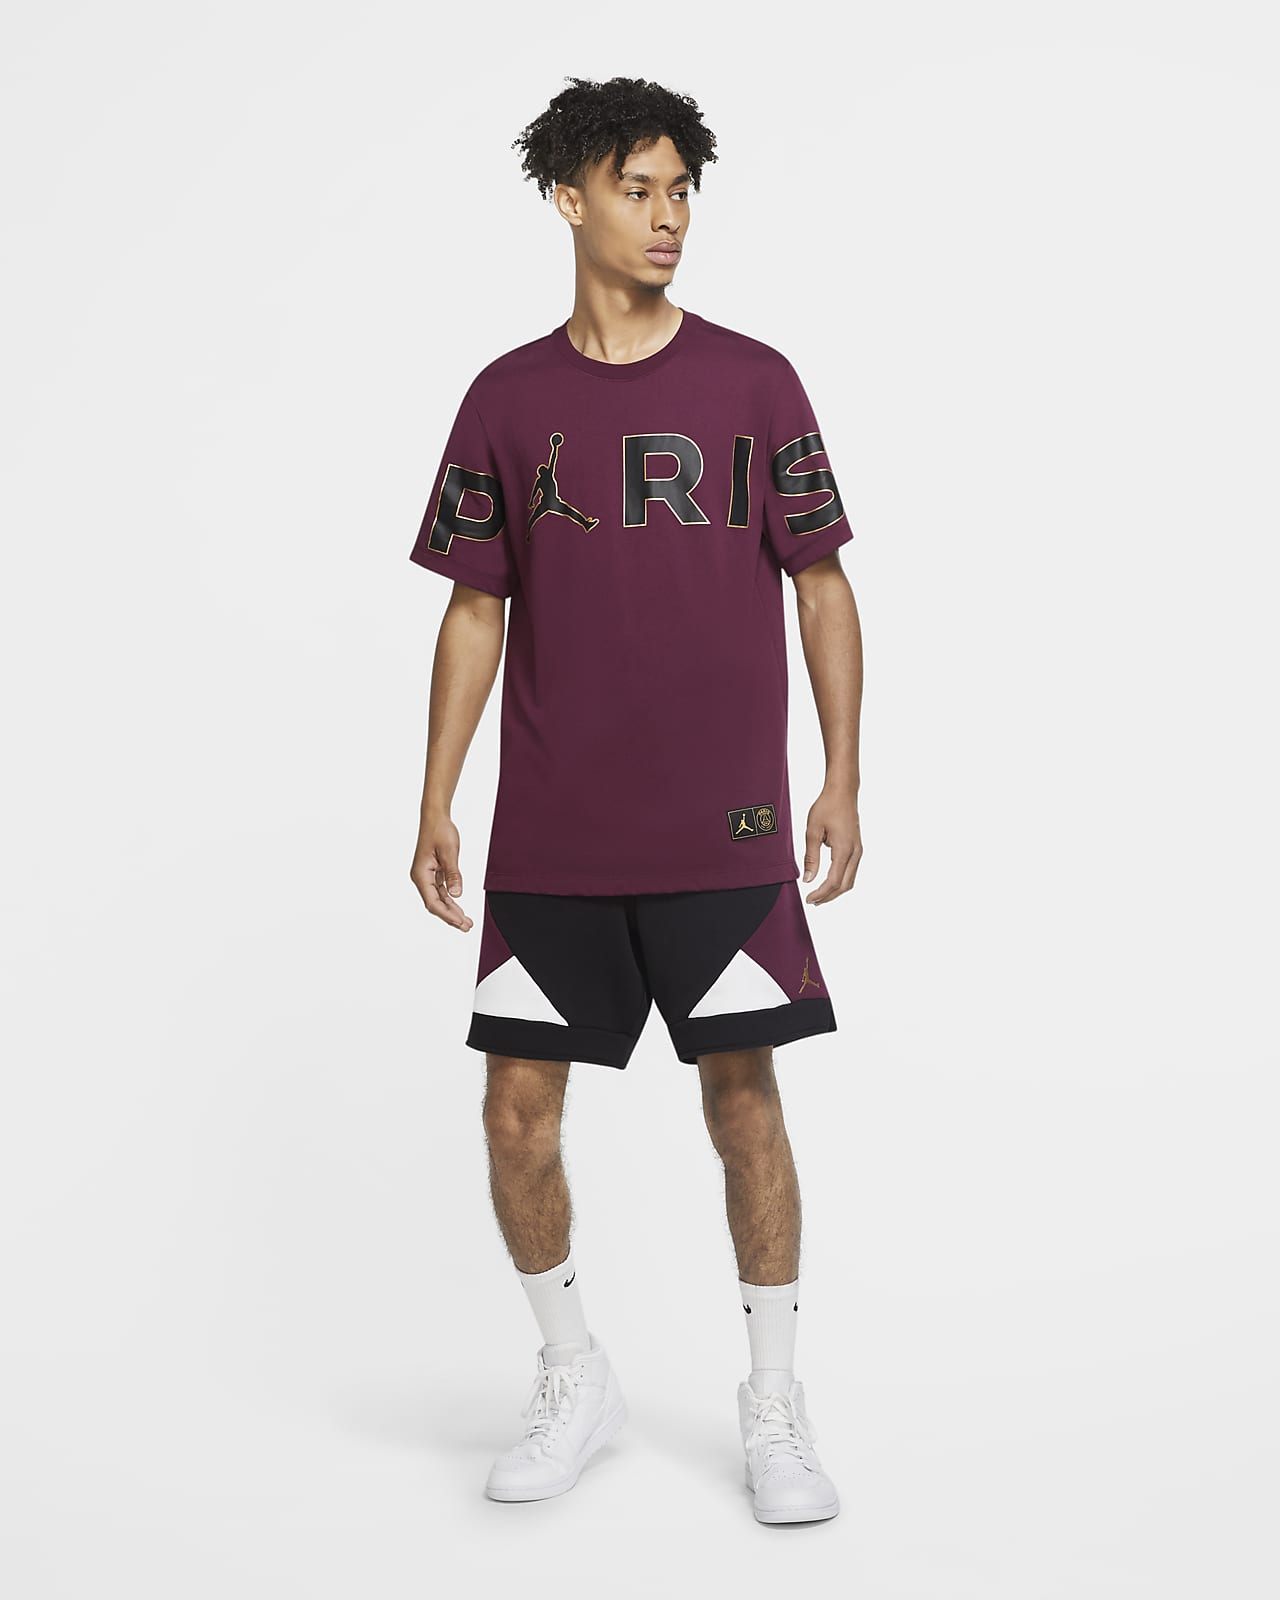 Nike公式 パリ サンジェルマン メンズ ワードマーク Tシャツ オンラインストア 通販サイト